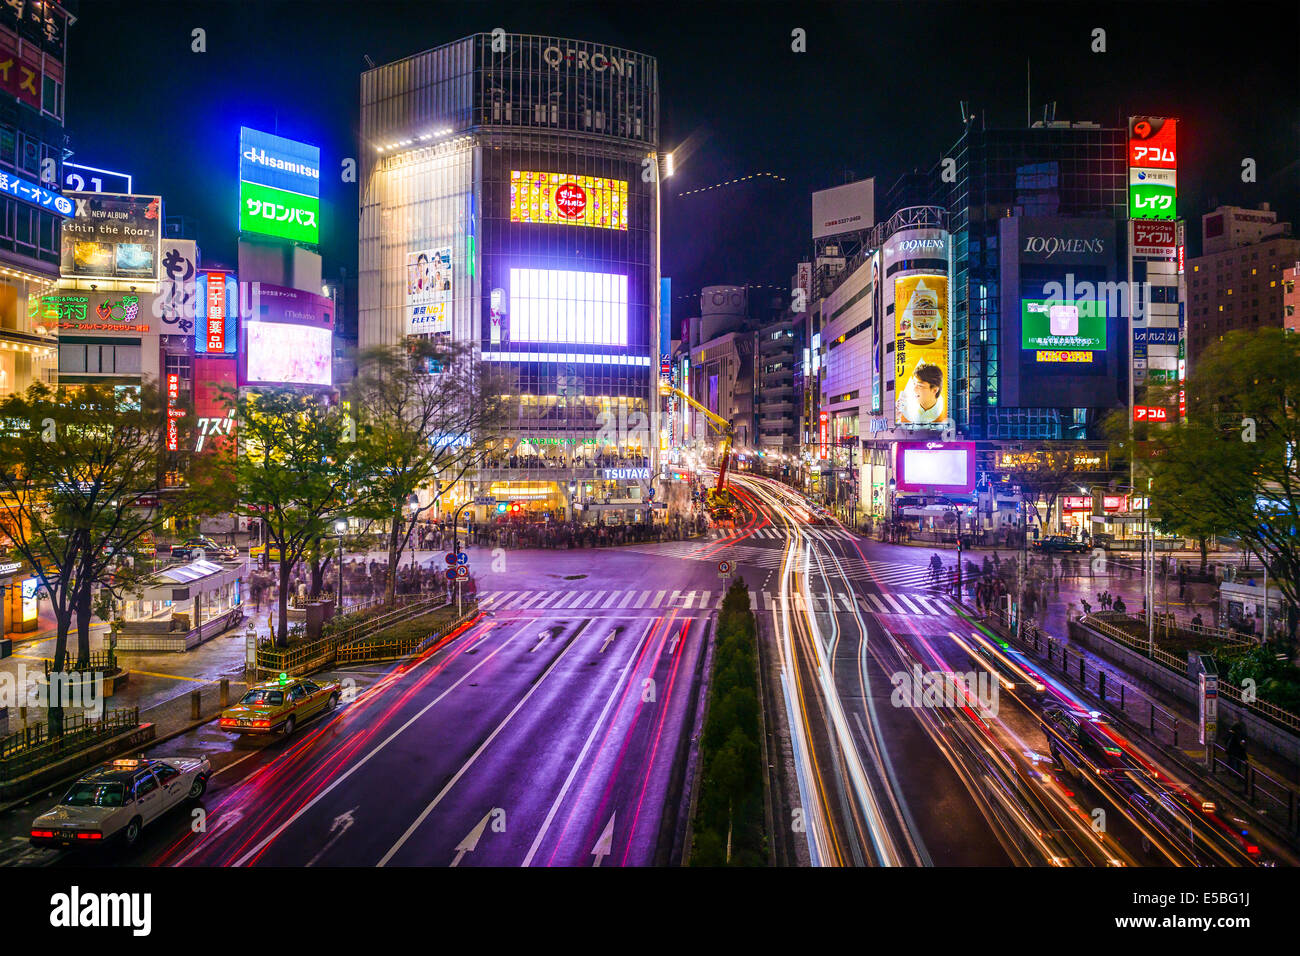 TOKYO, JAPAN - MARCH 30, 2014: Shibuya Ward at Shibuya crossing is one of Tokyo's major nightlife and fashion centers. Stock Photo